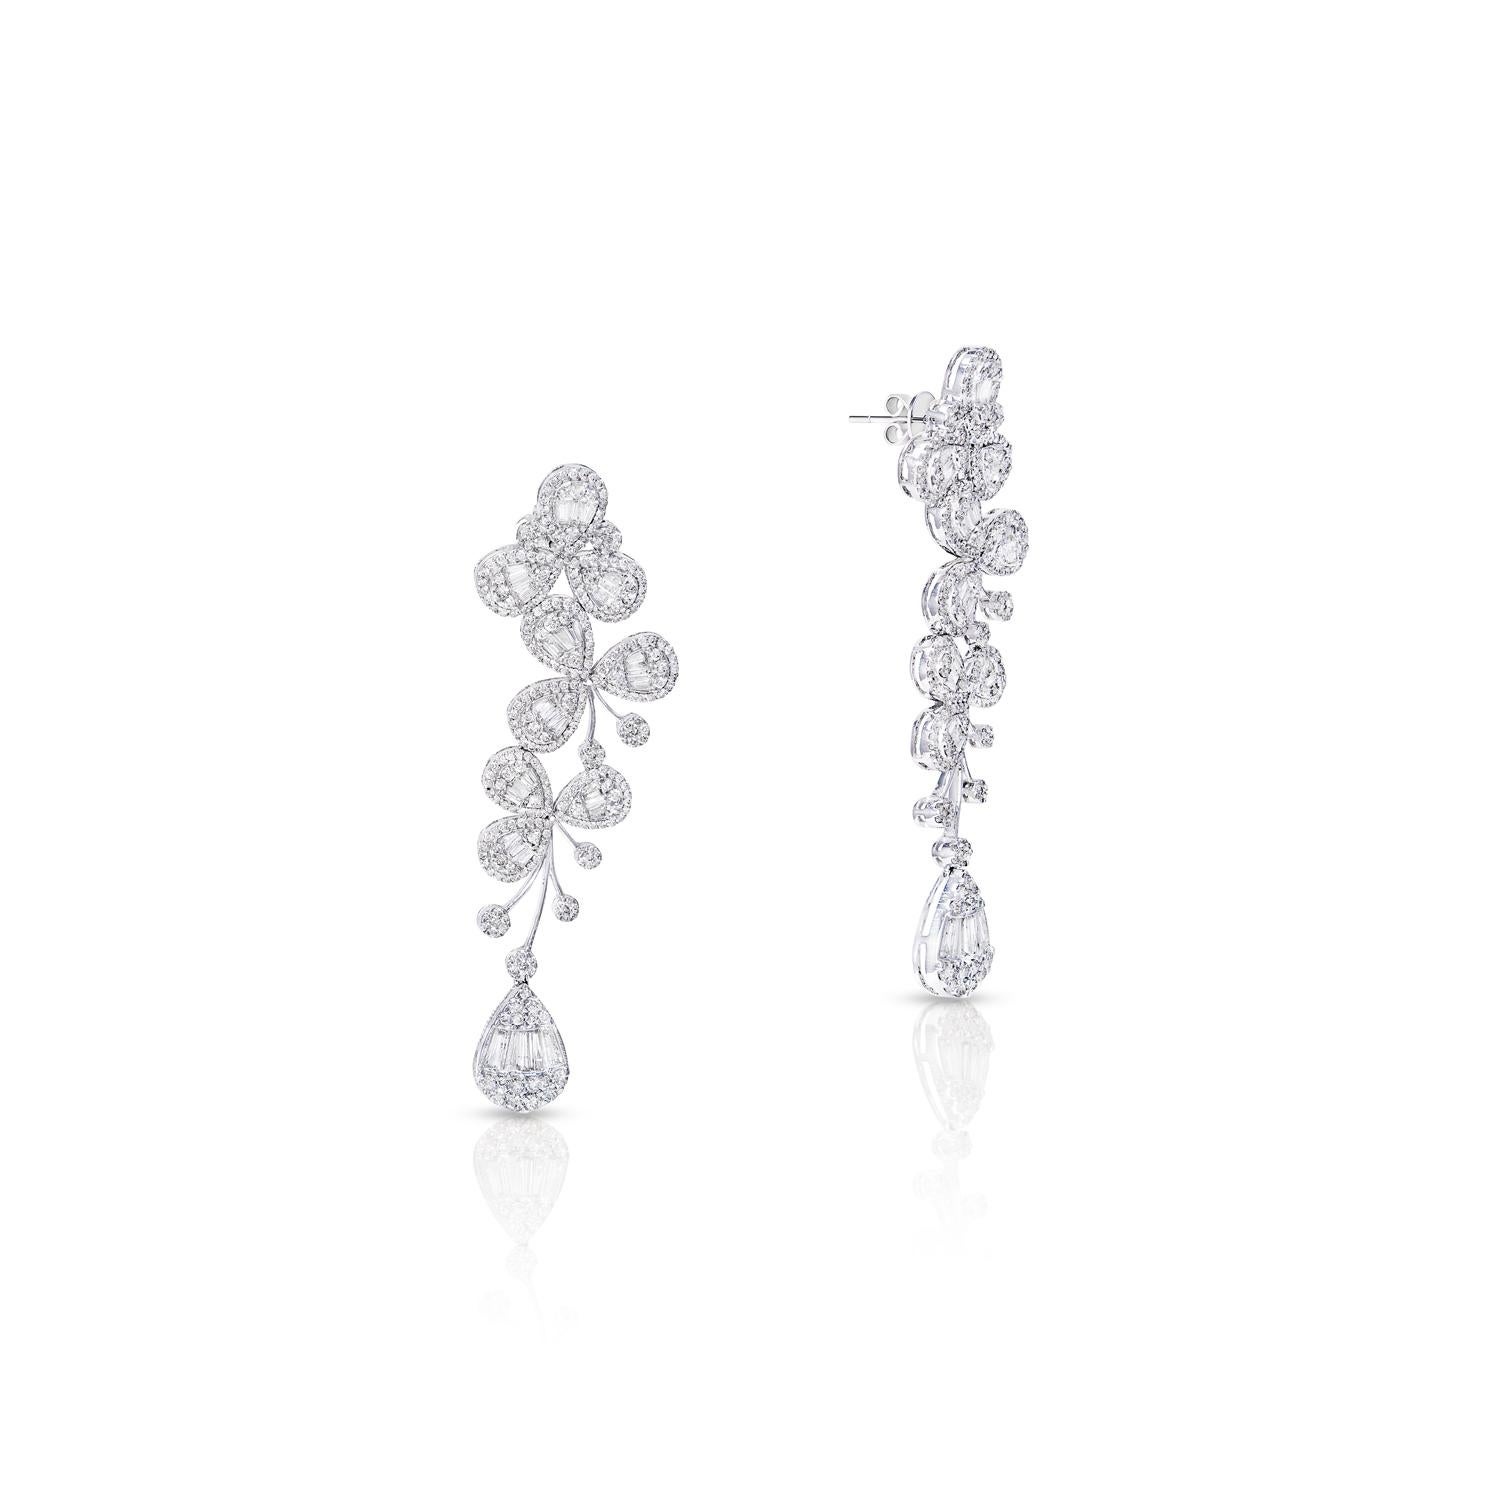 Diamond Hanging Earrings For Ladies:

Main Diamonds:
Carat Weight: 7.01 Carats
Shape: Combine Mix Shape

Metal: 14 Karat White Gold
Style: Hanging Earrings

Total Carat Weight: 7.01 Carats